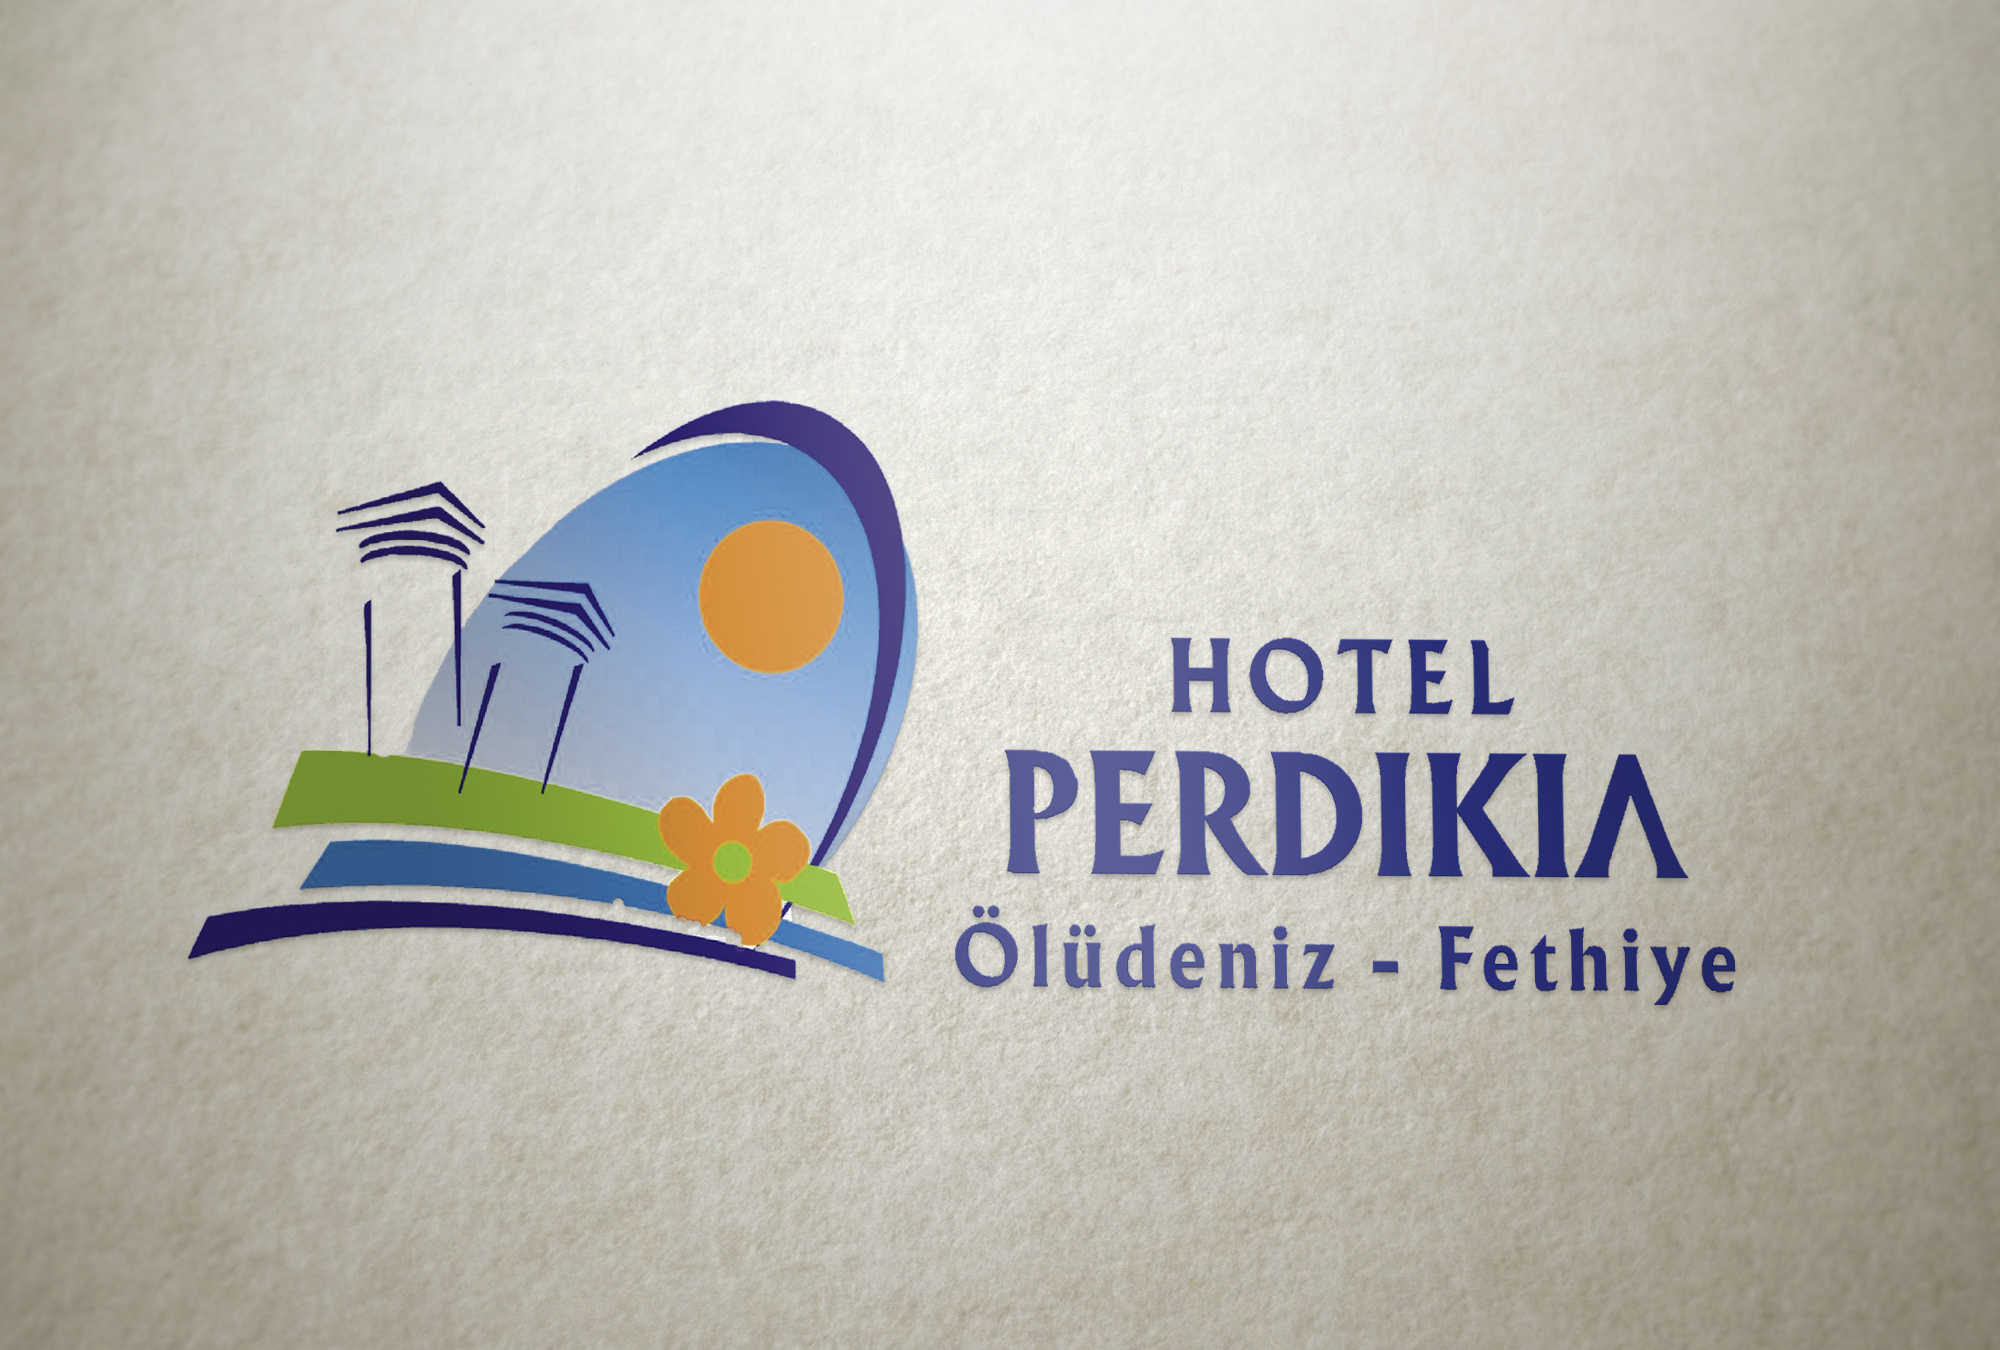 Hotel Perdikia